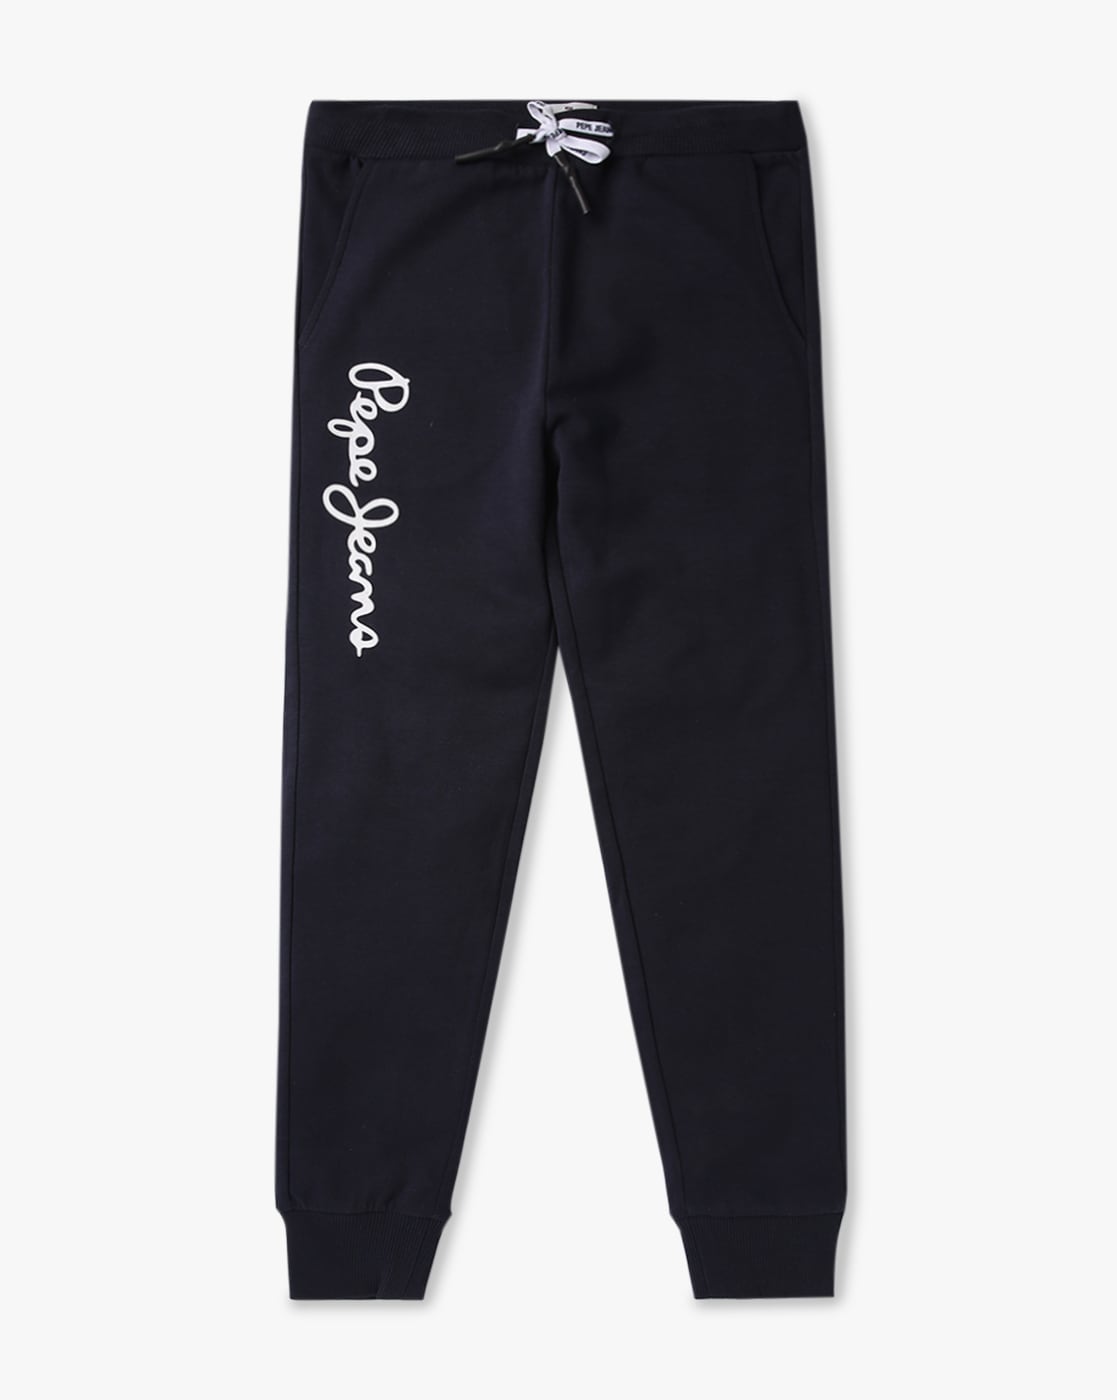 Buy Pepe Jeans Mullet Casual Chinos Pants Black online